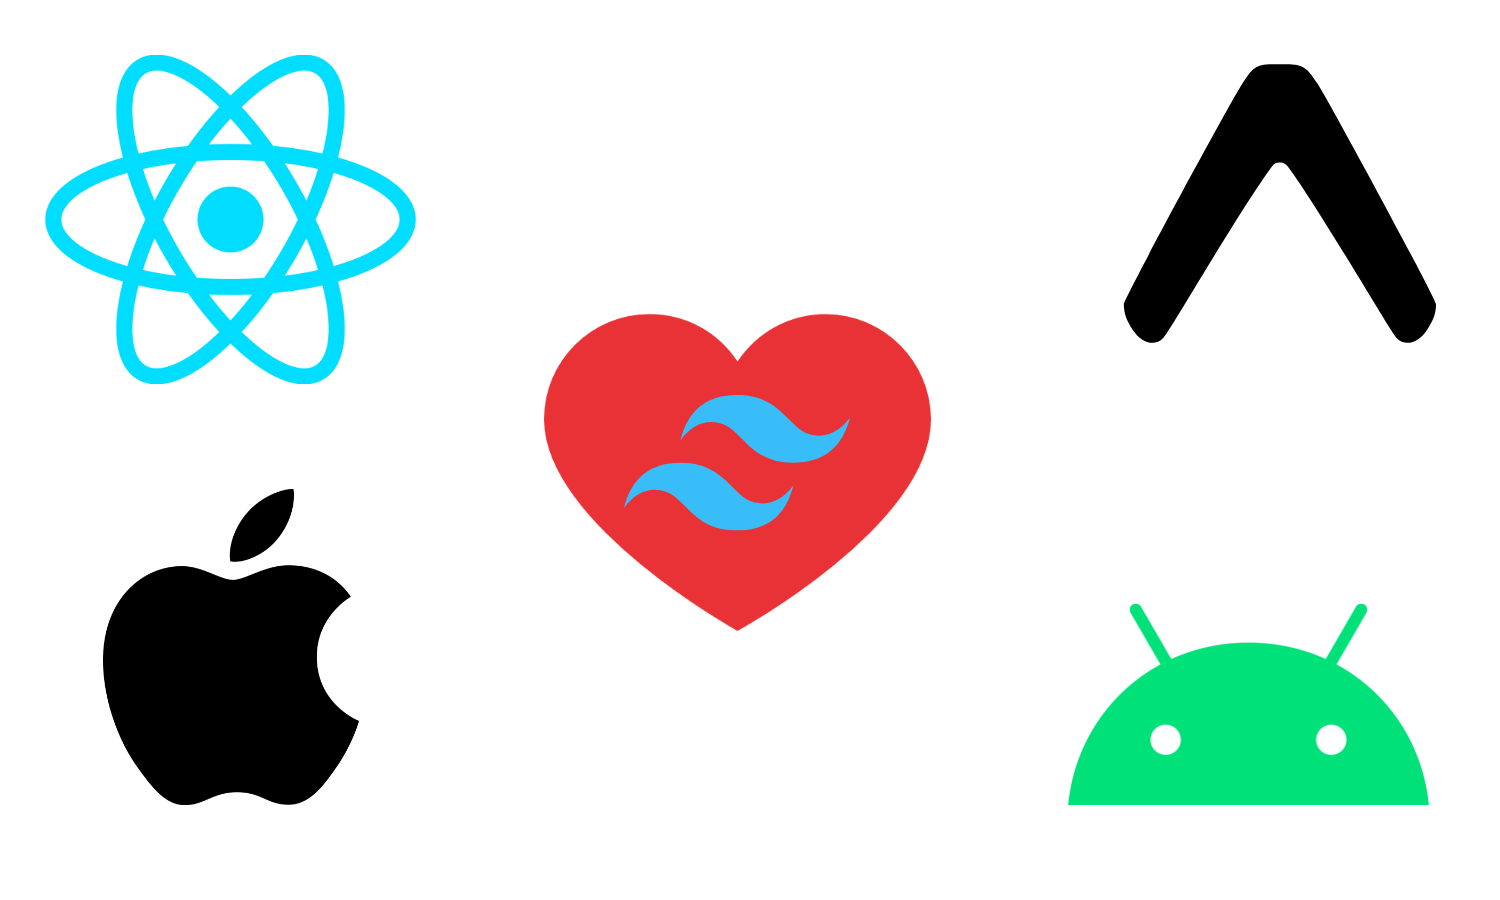 Thumbnail image: React Native, Expo, Apple, and Android logos